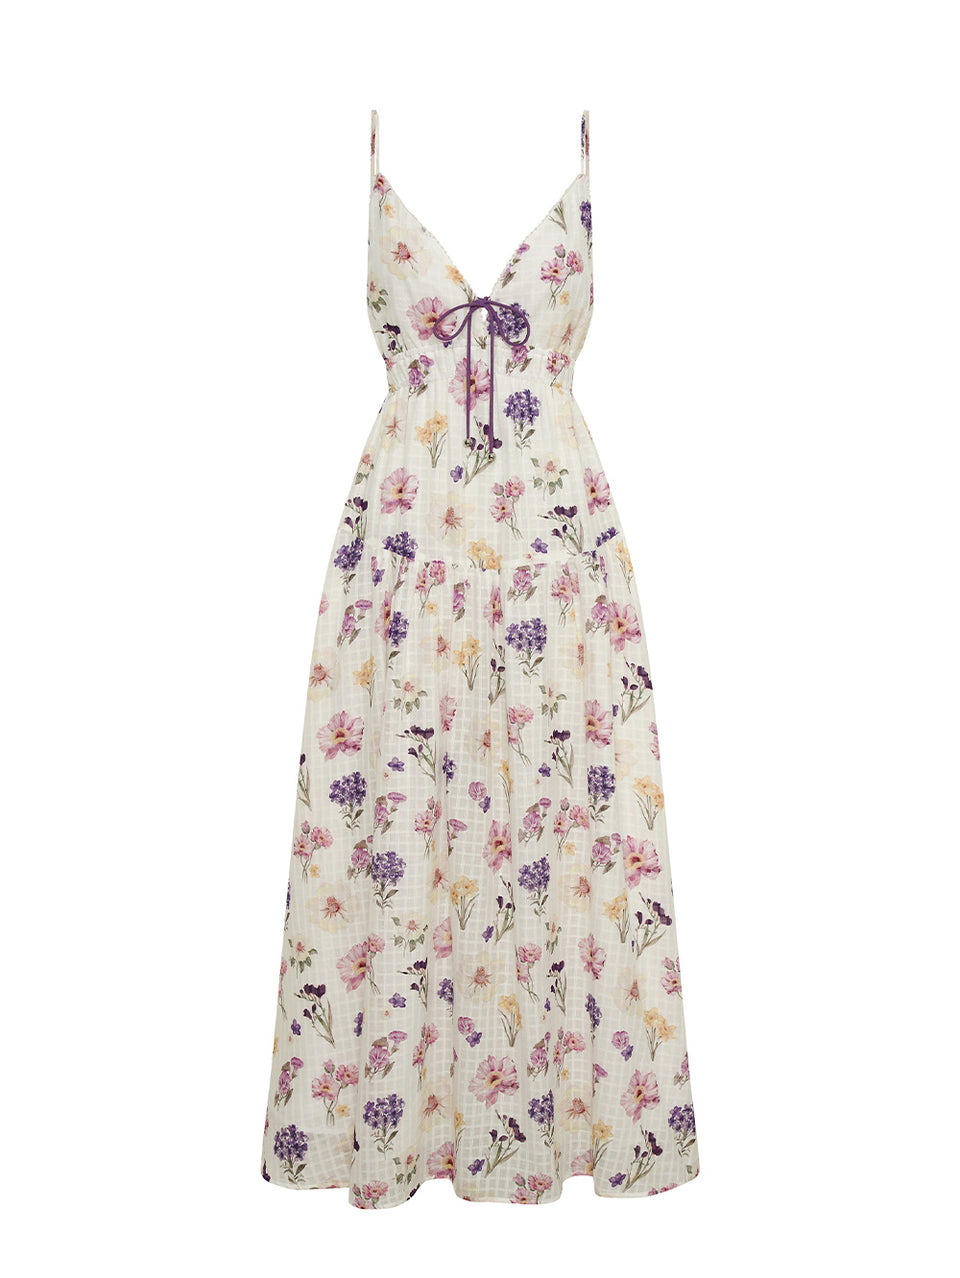 Phoebe Maxi Dress KIVARI | Ivory and purple maxi dress